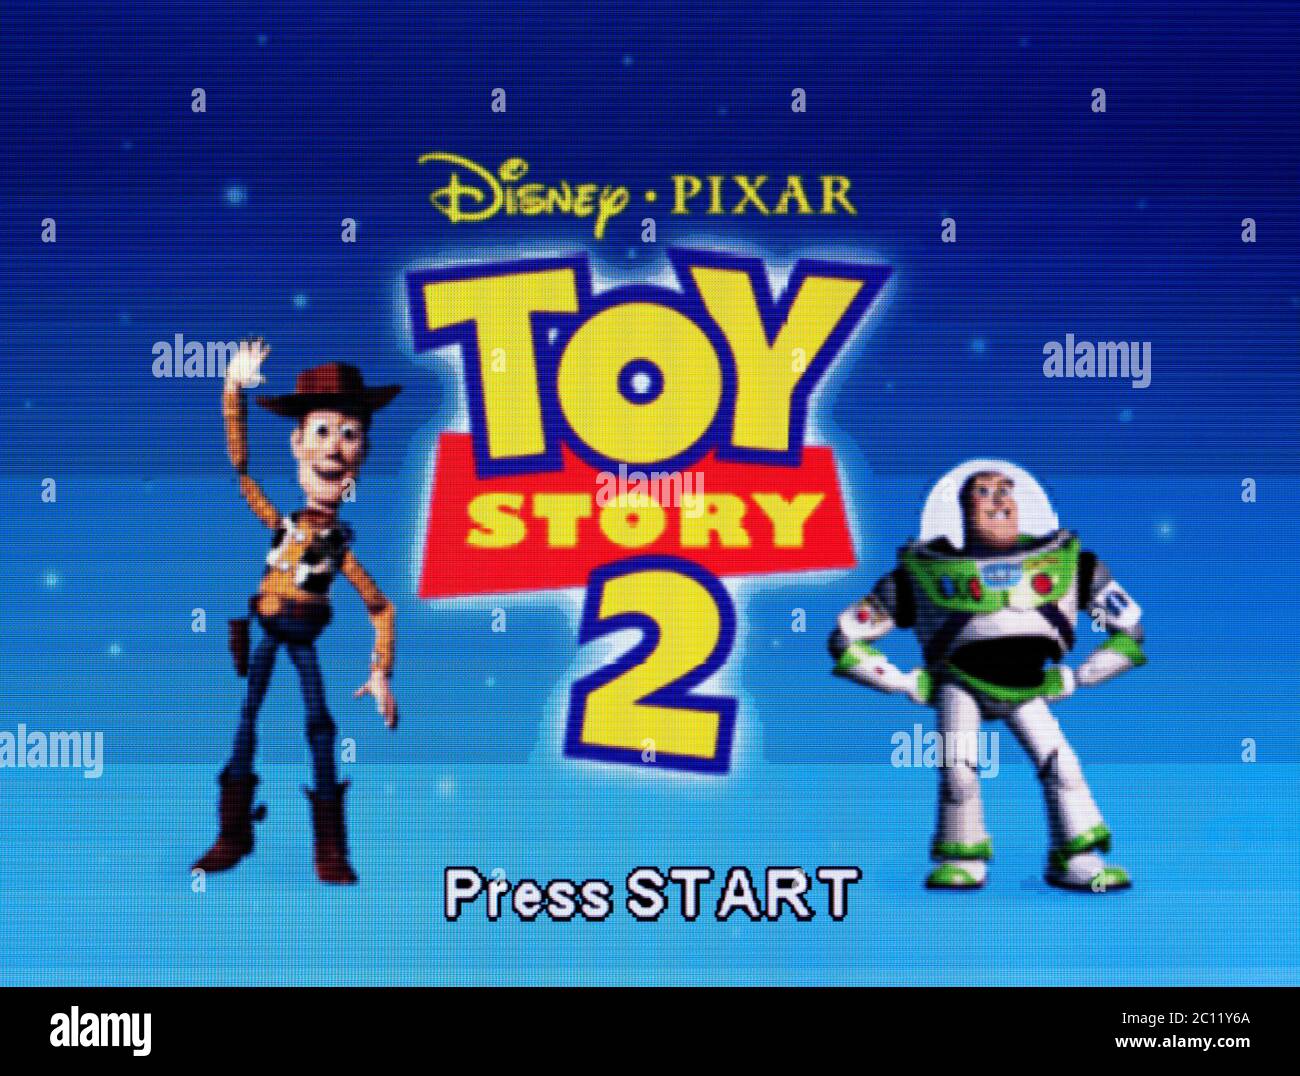 Disney Pixar Toy Story 2 Nintendo 64 Videogame Editorial Use Only Stock Photo Alamy